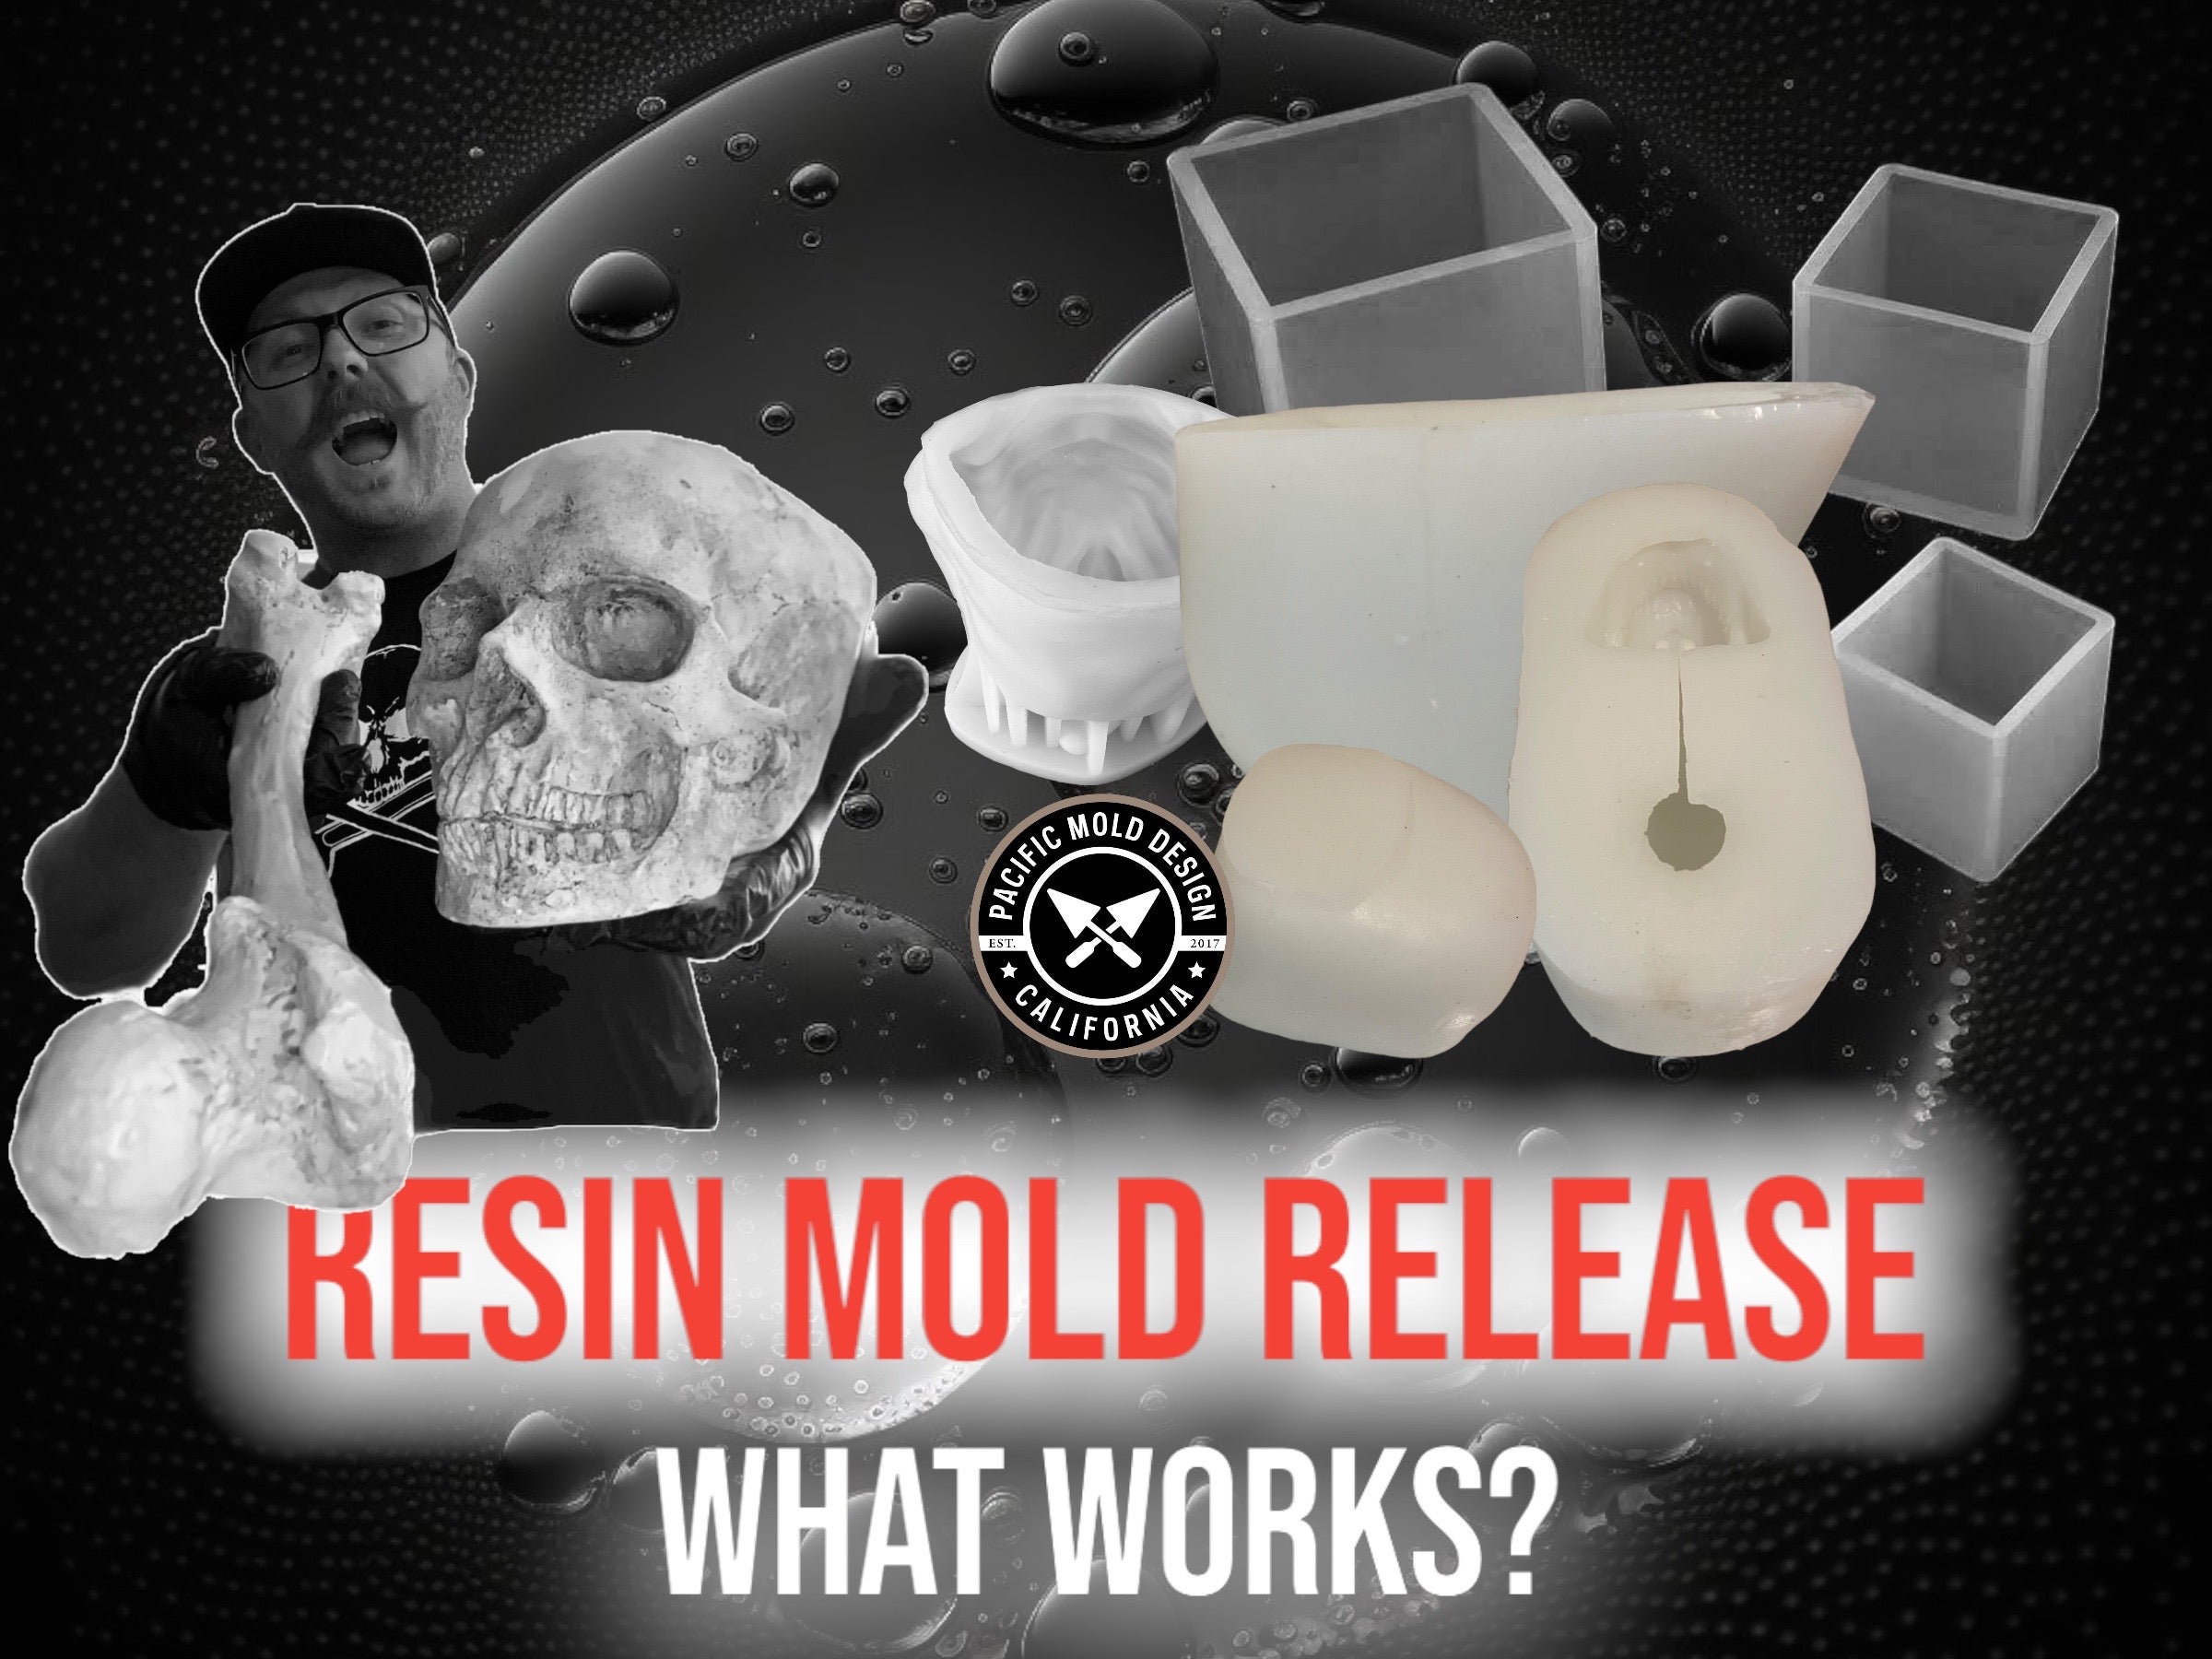 DIY Mold Release Agent - Apel USA